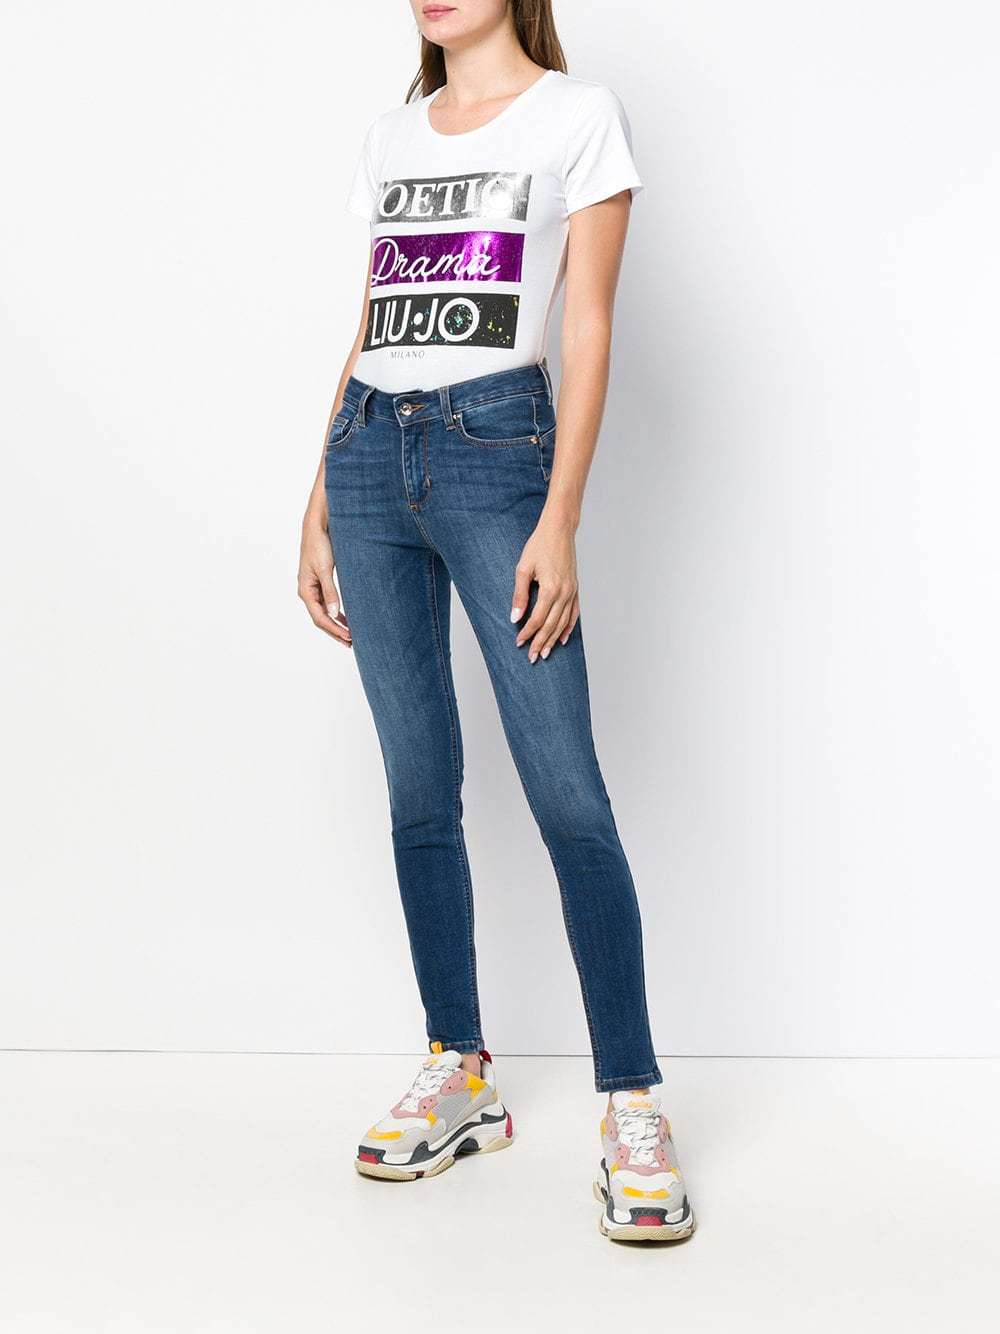 Entretener Inconsistente Comprometido Liu Jo Faded Slim Fit Jeans, $111 | farfetch.com | Lookastic